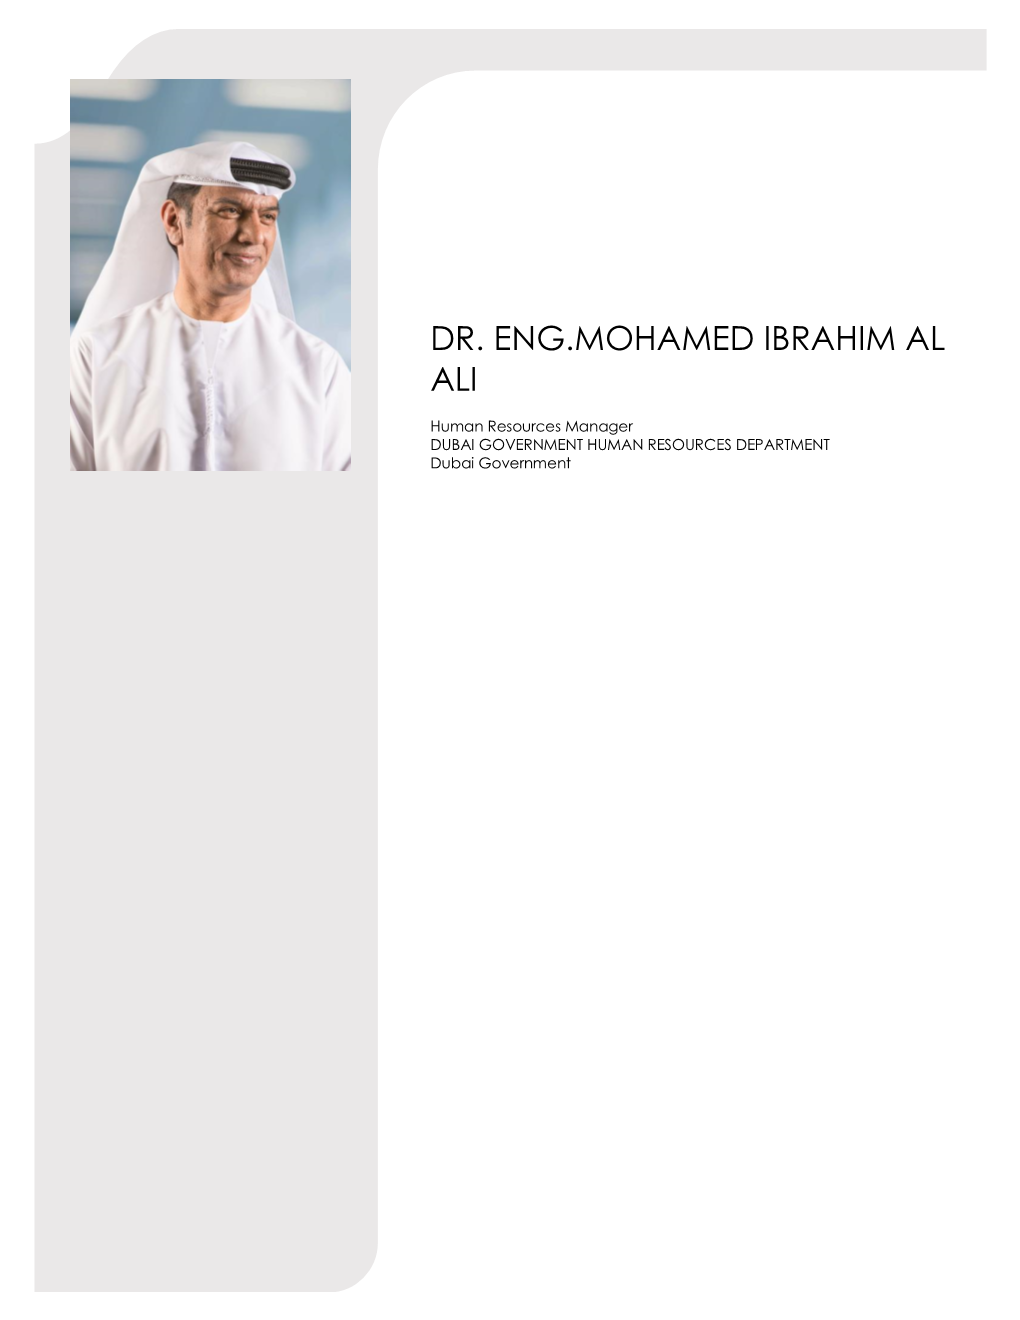 Dr. Eng.Mohamed Ibrahim Al Ali